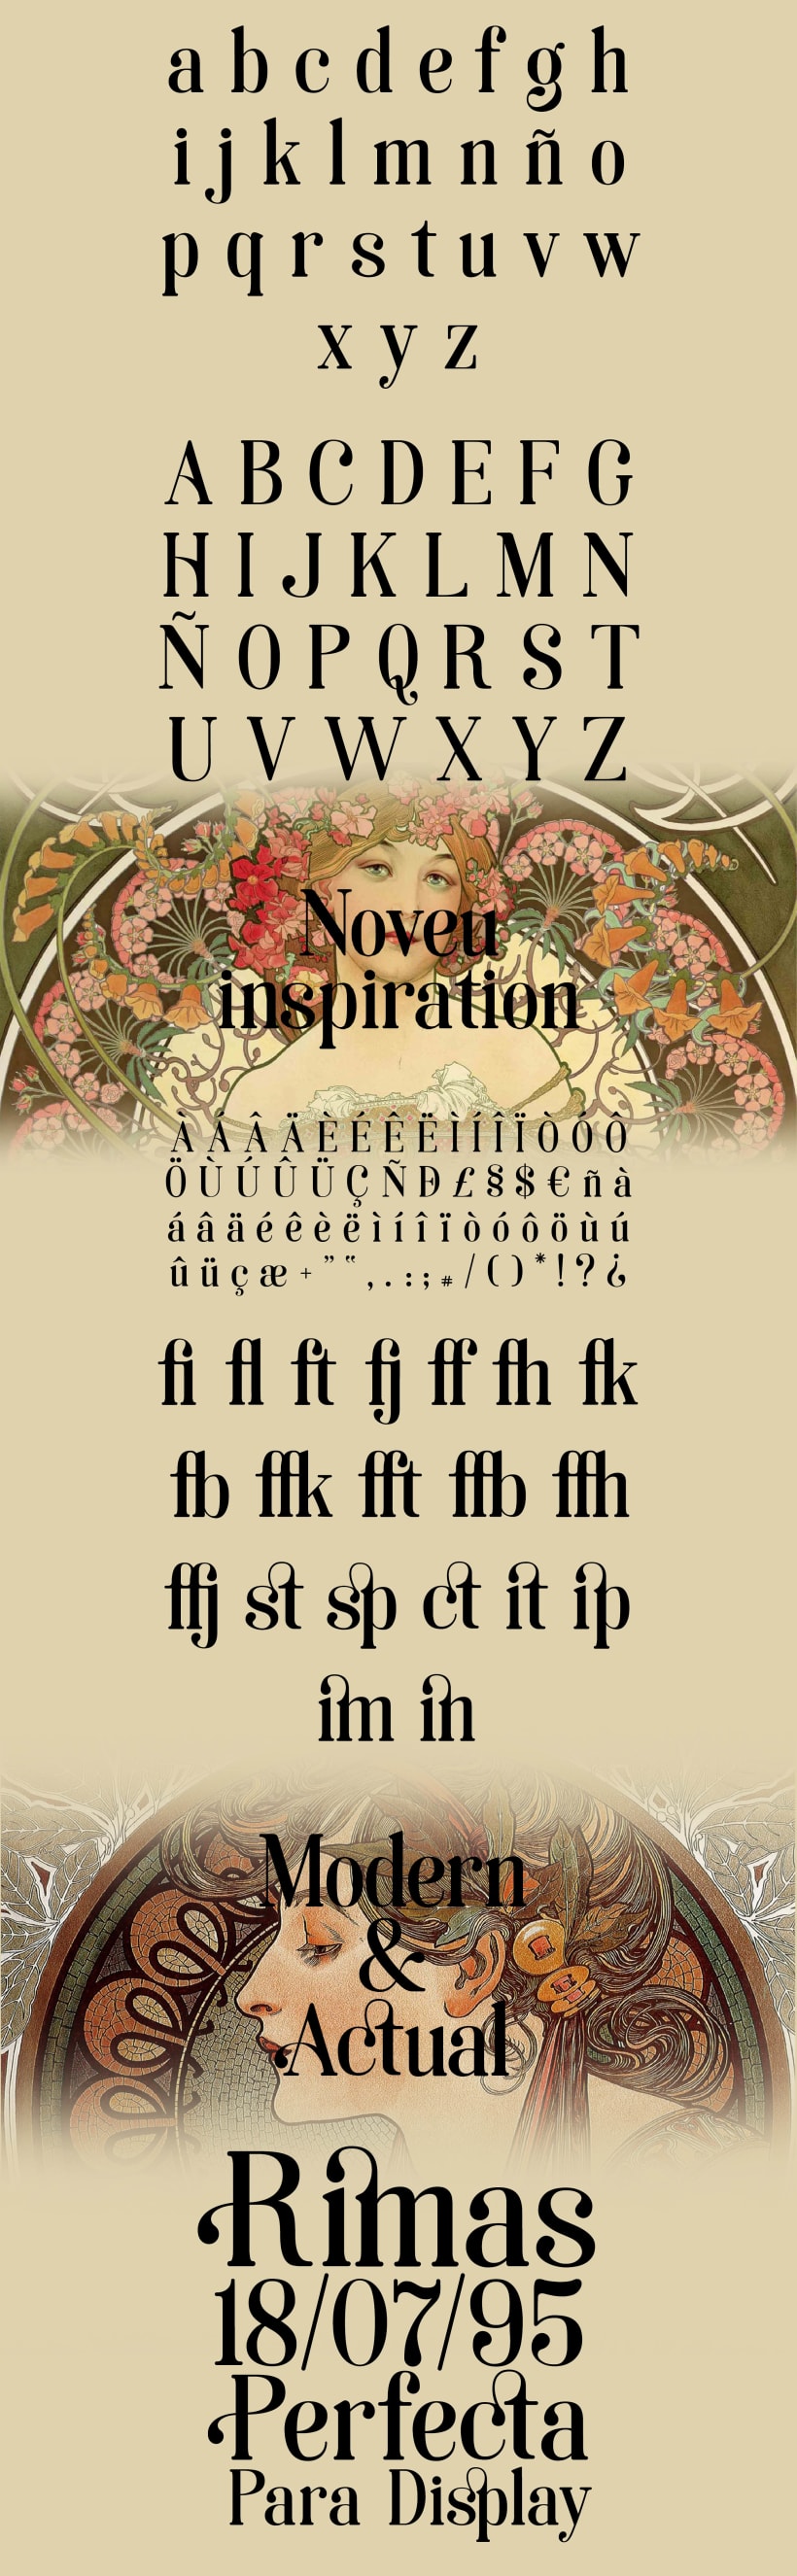 Soria Free Noveau Typeface Domestika